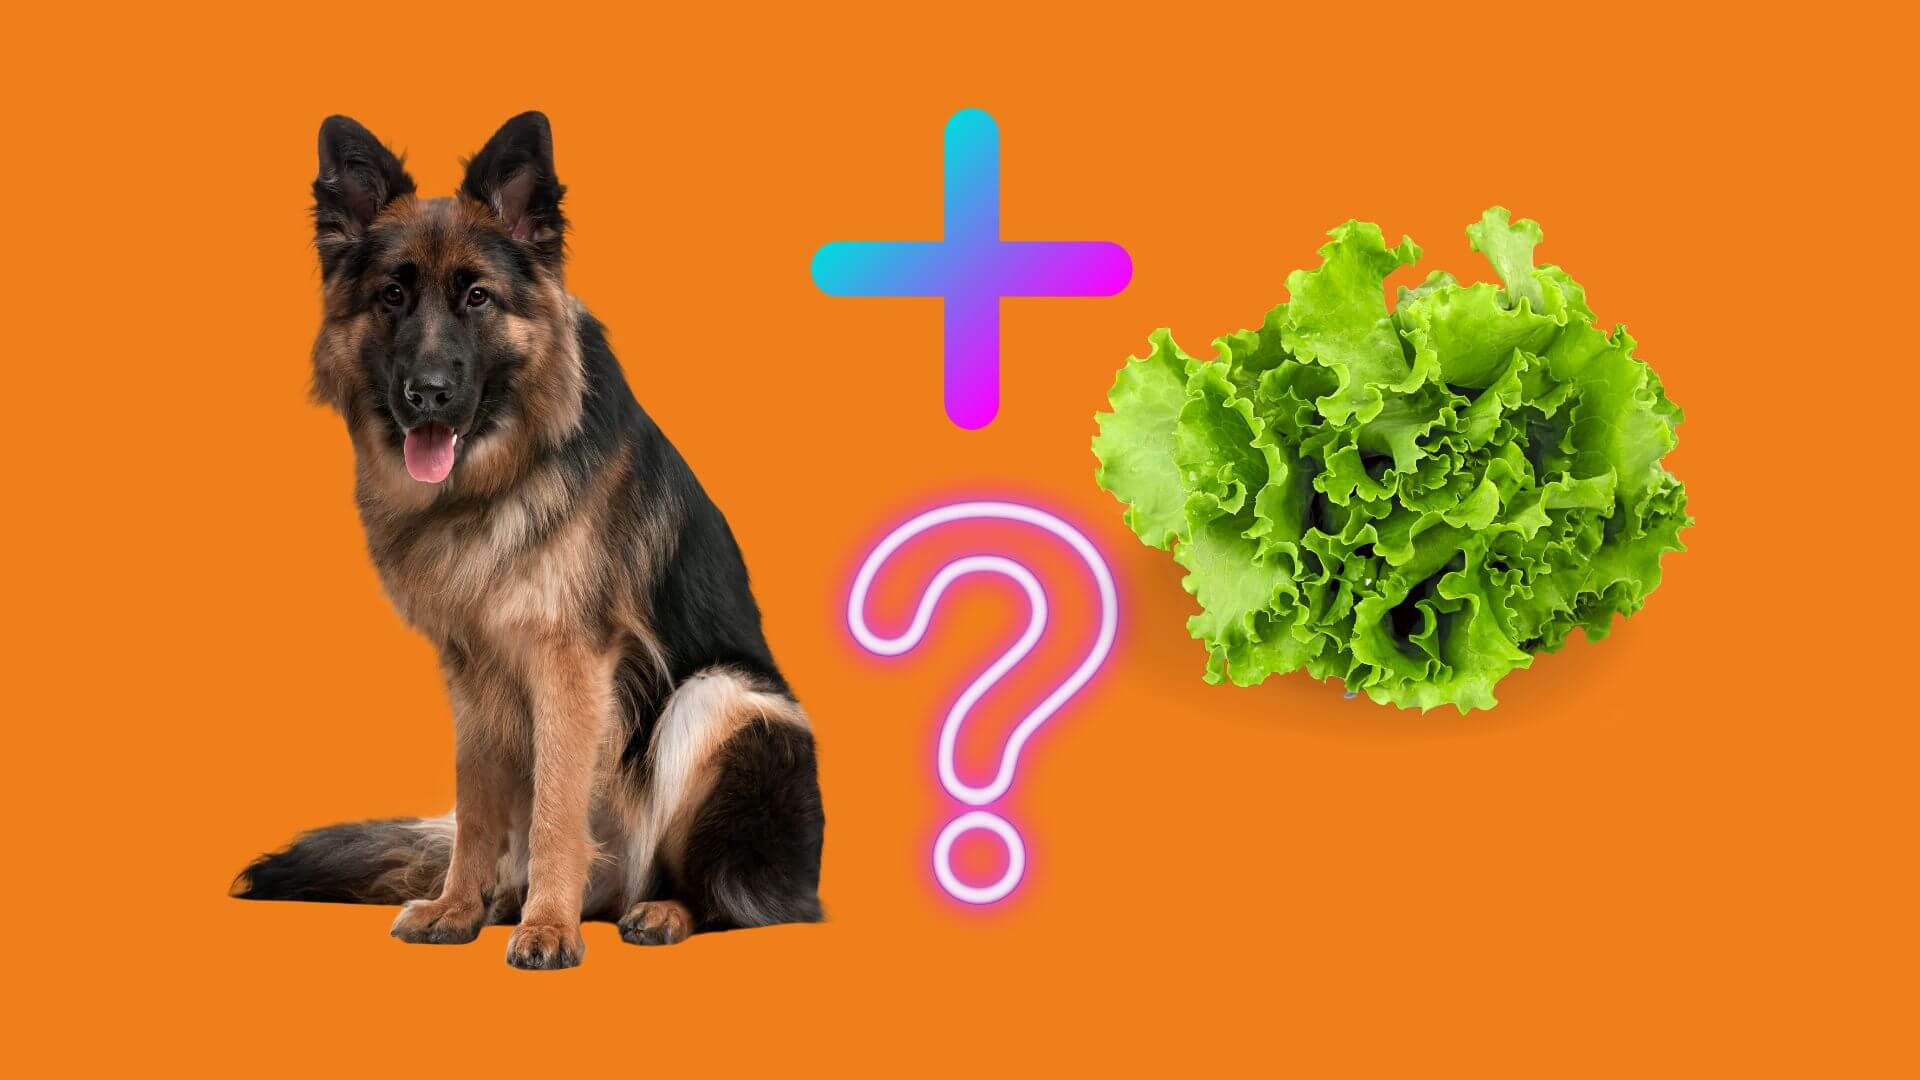 can i feed my dog lettuce